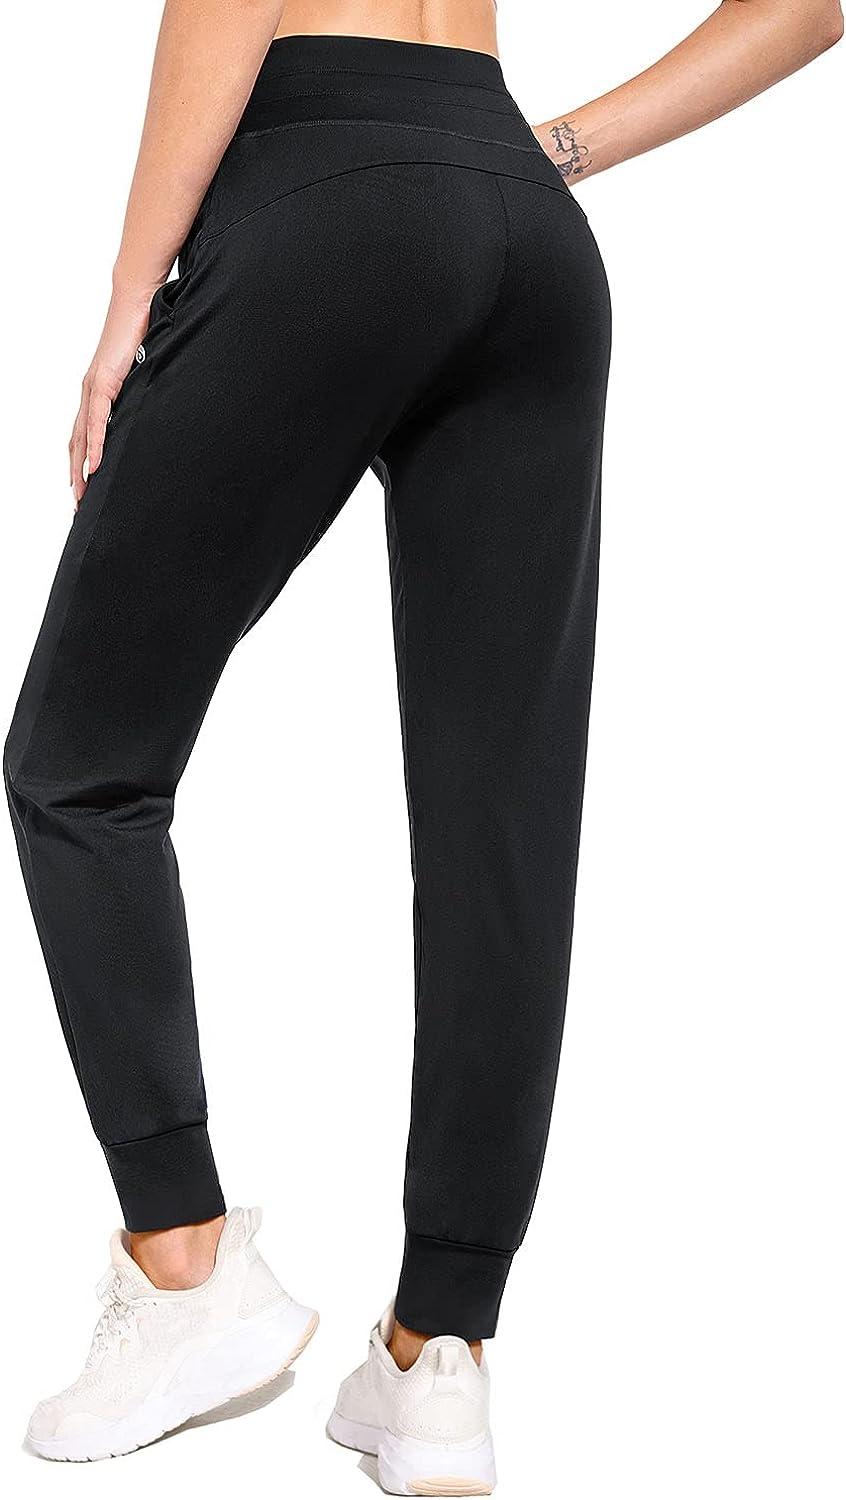 BALEAF Women's Fleece Lined Pants Water Resistant Sweatpants